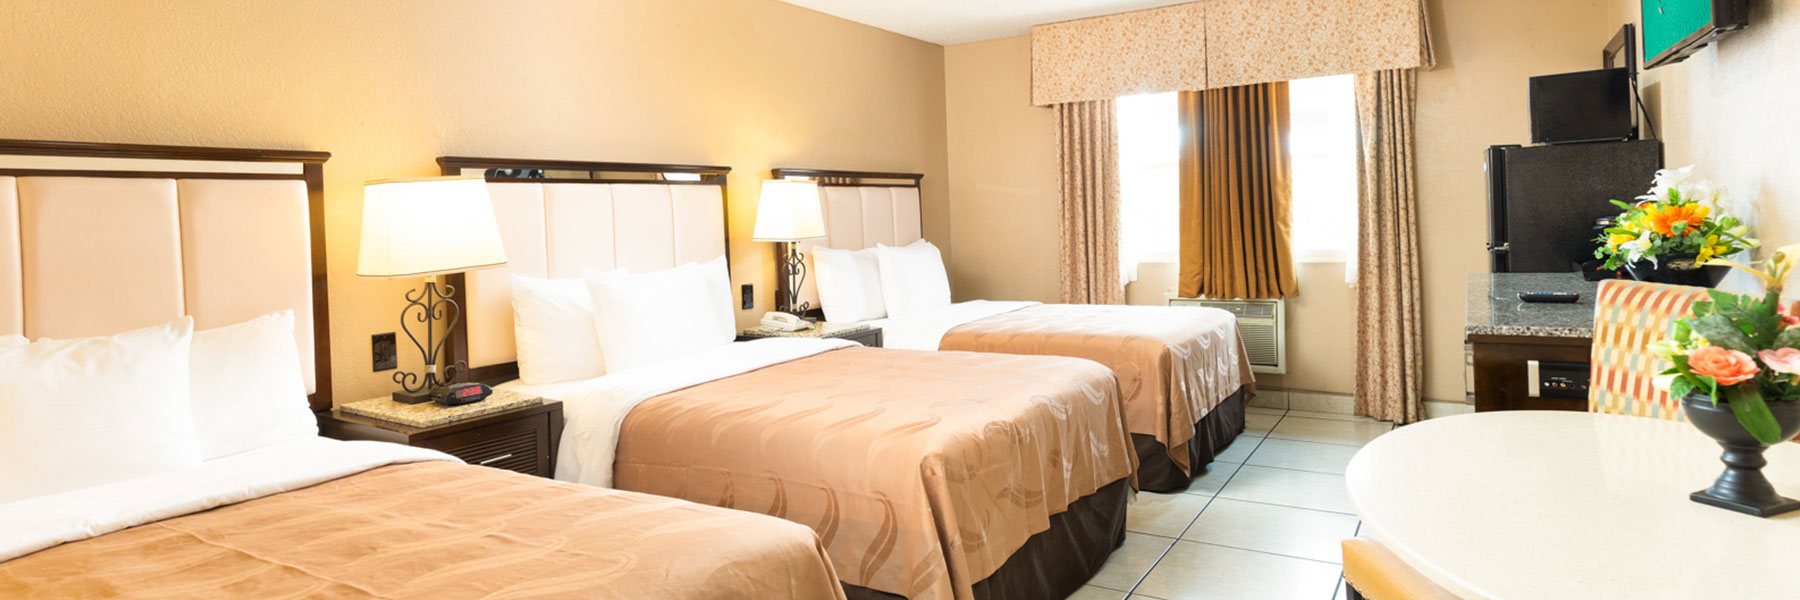 Accommodations at Hotel Baja, San Diego